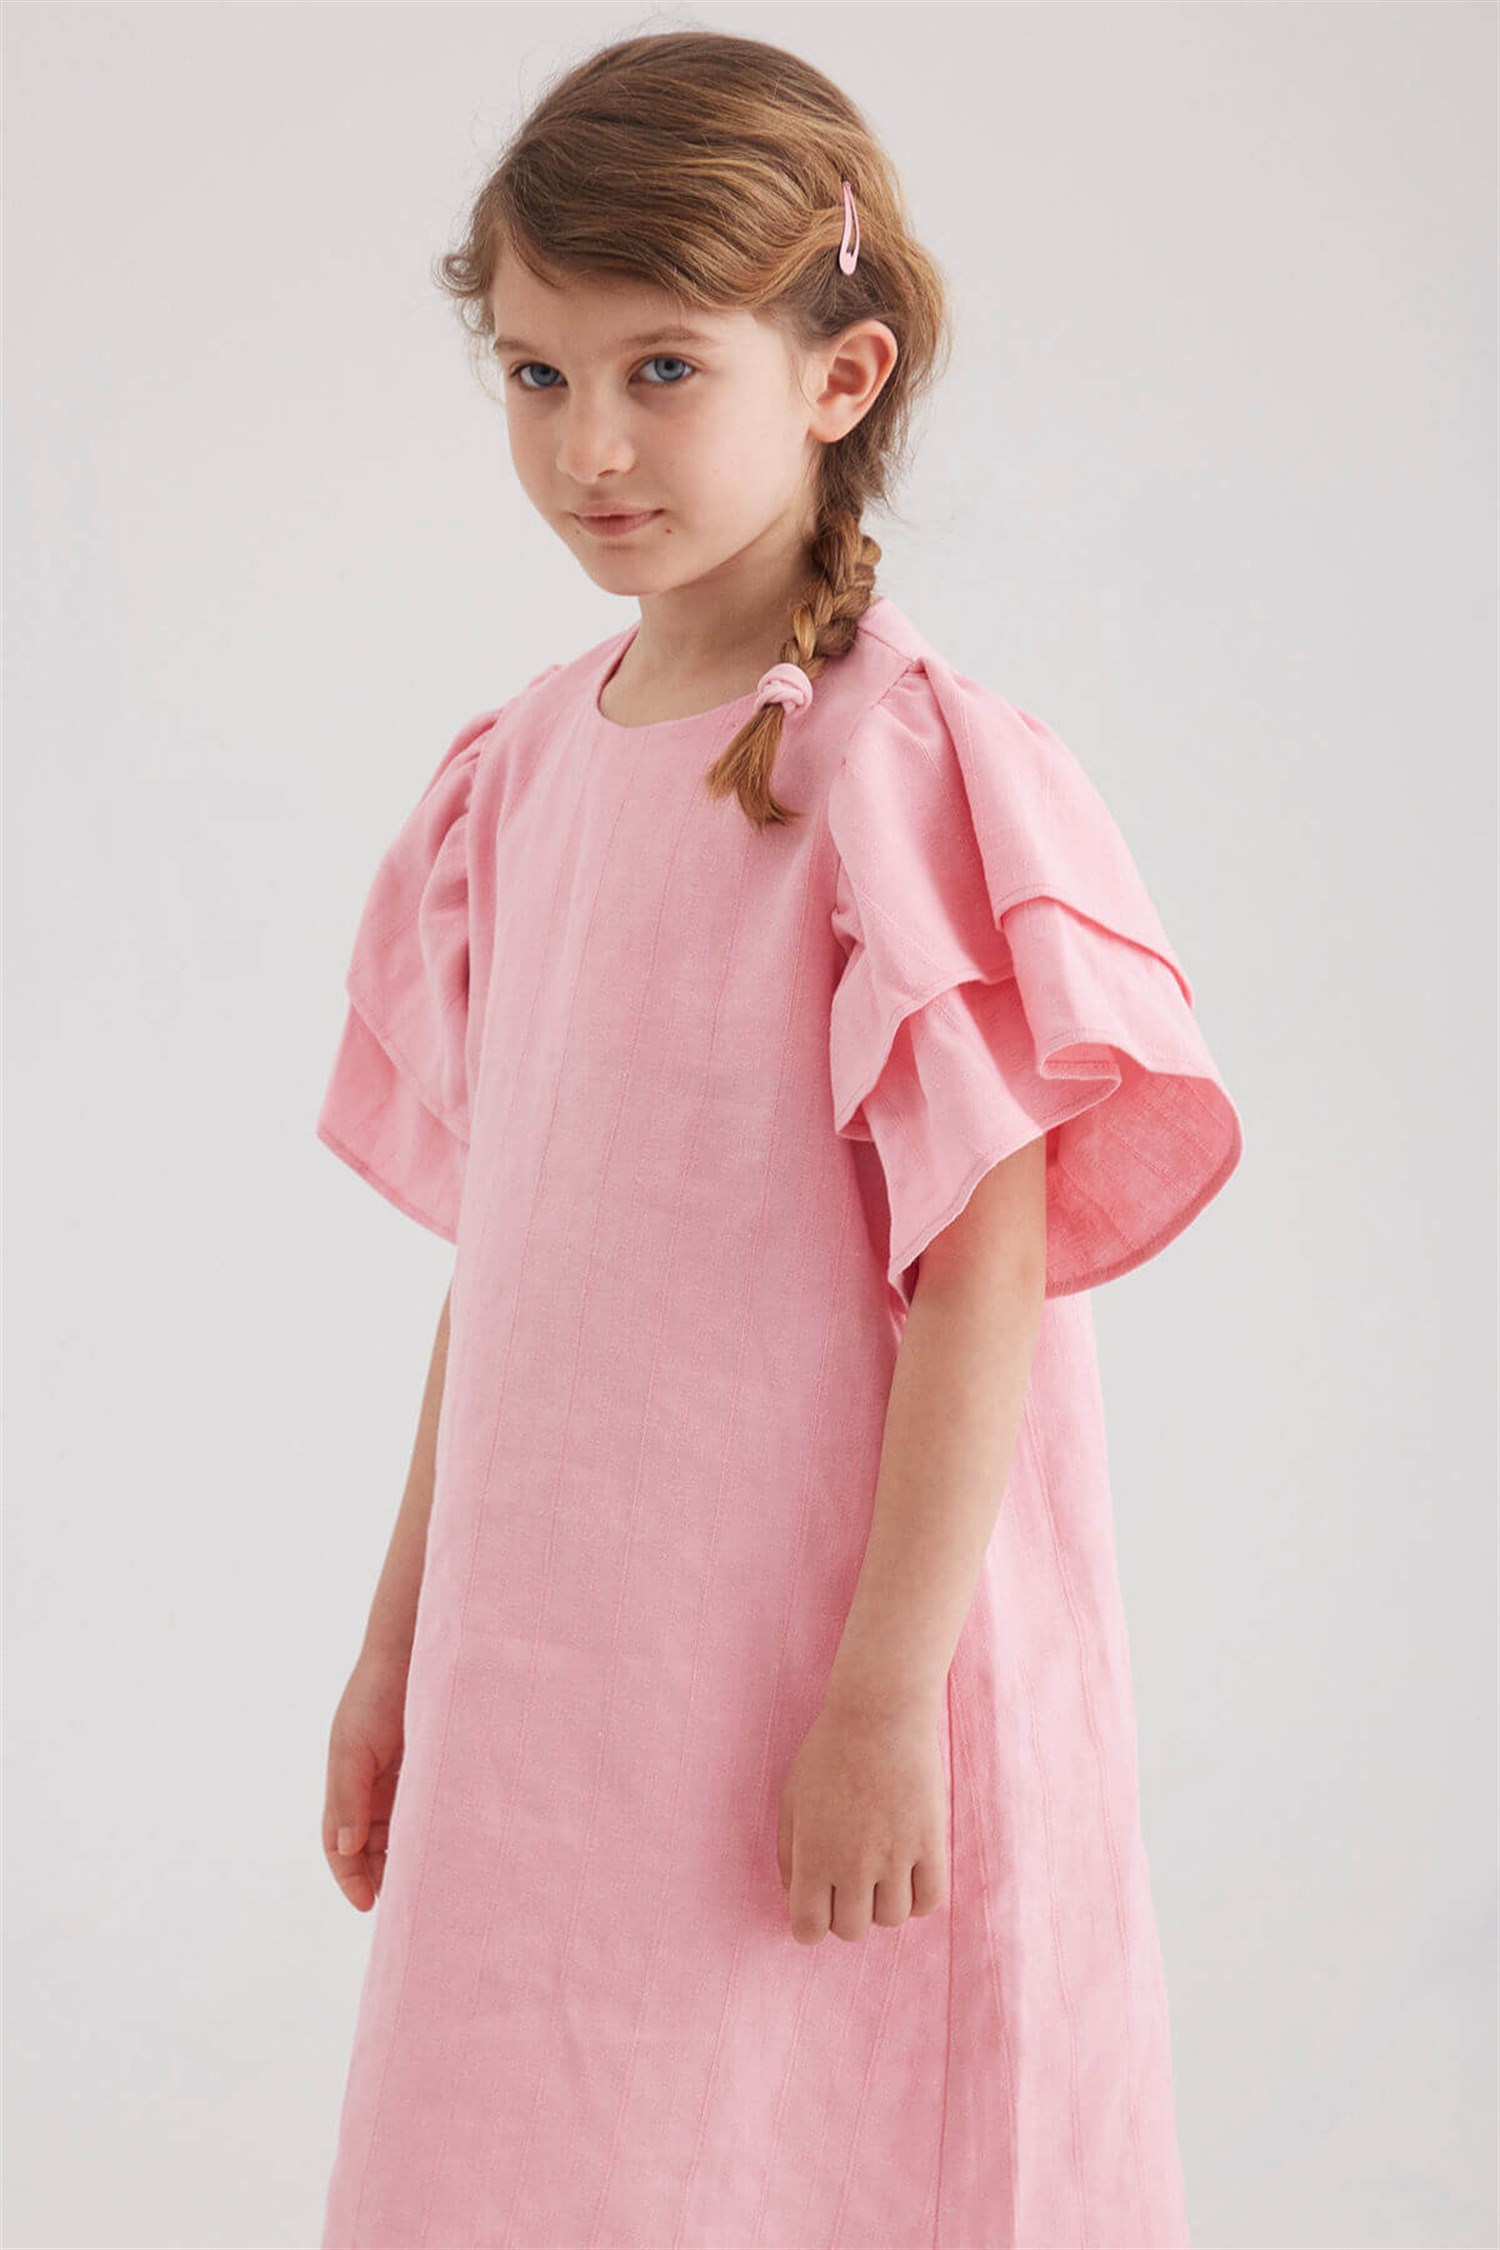 hoQuspoQus Kız Çocuk Elbise Pembe Renk (Ham Keten)